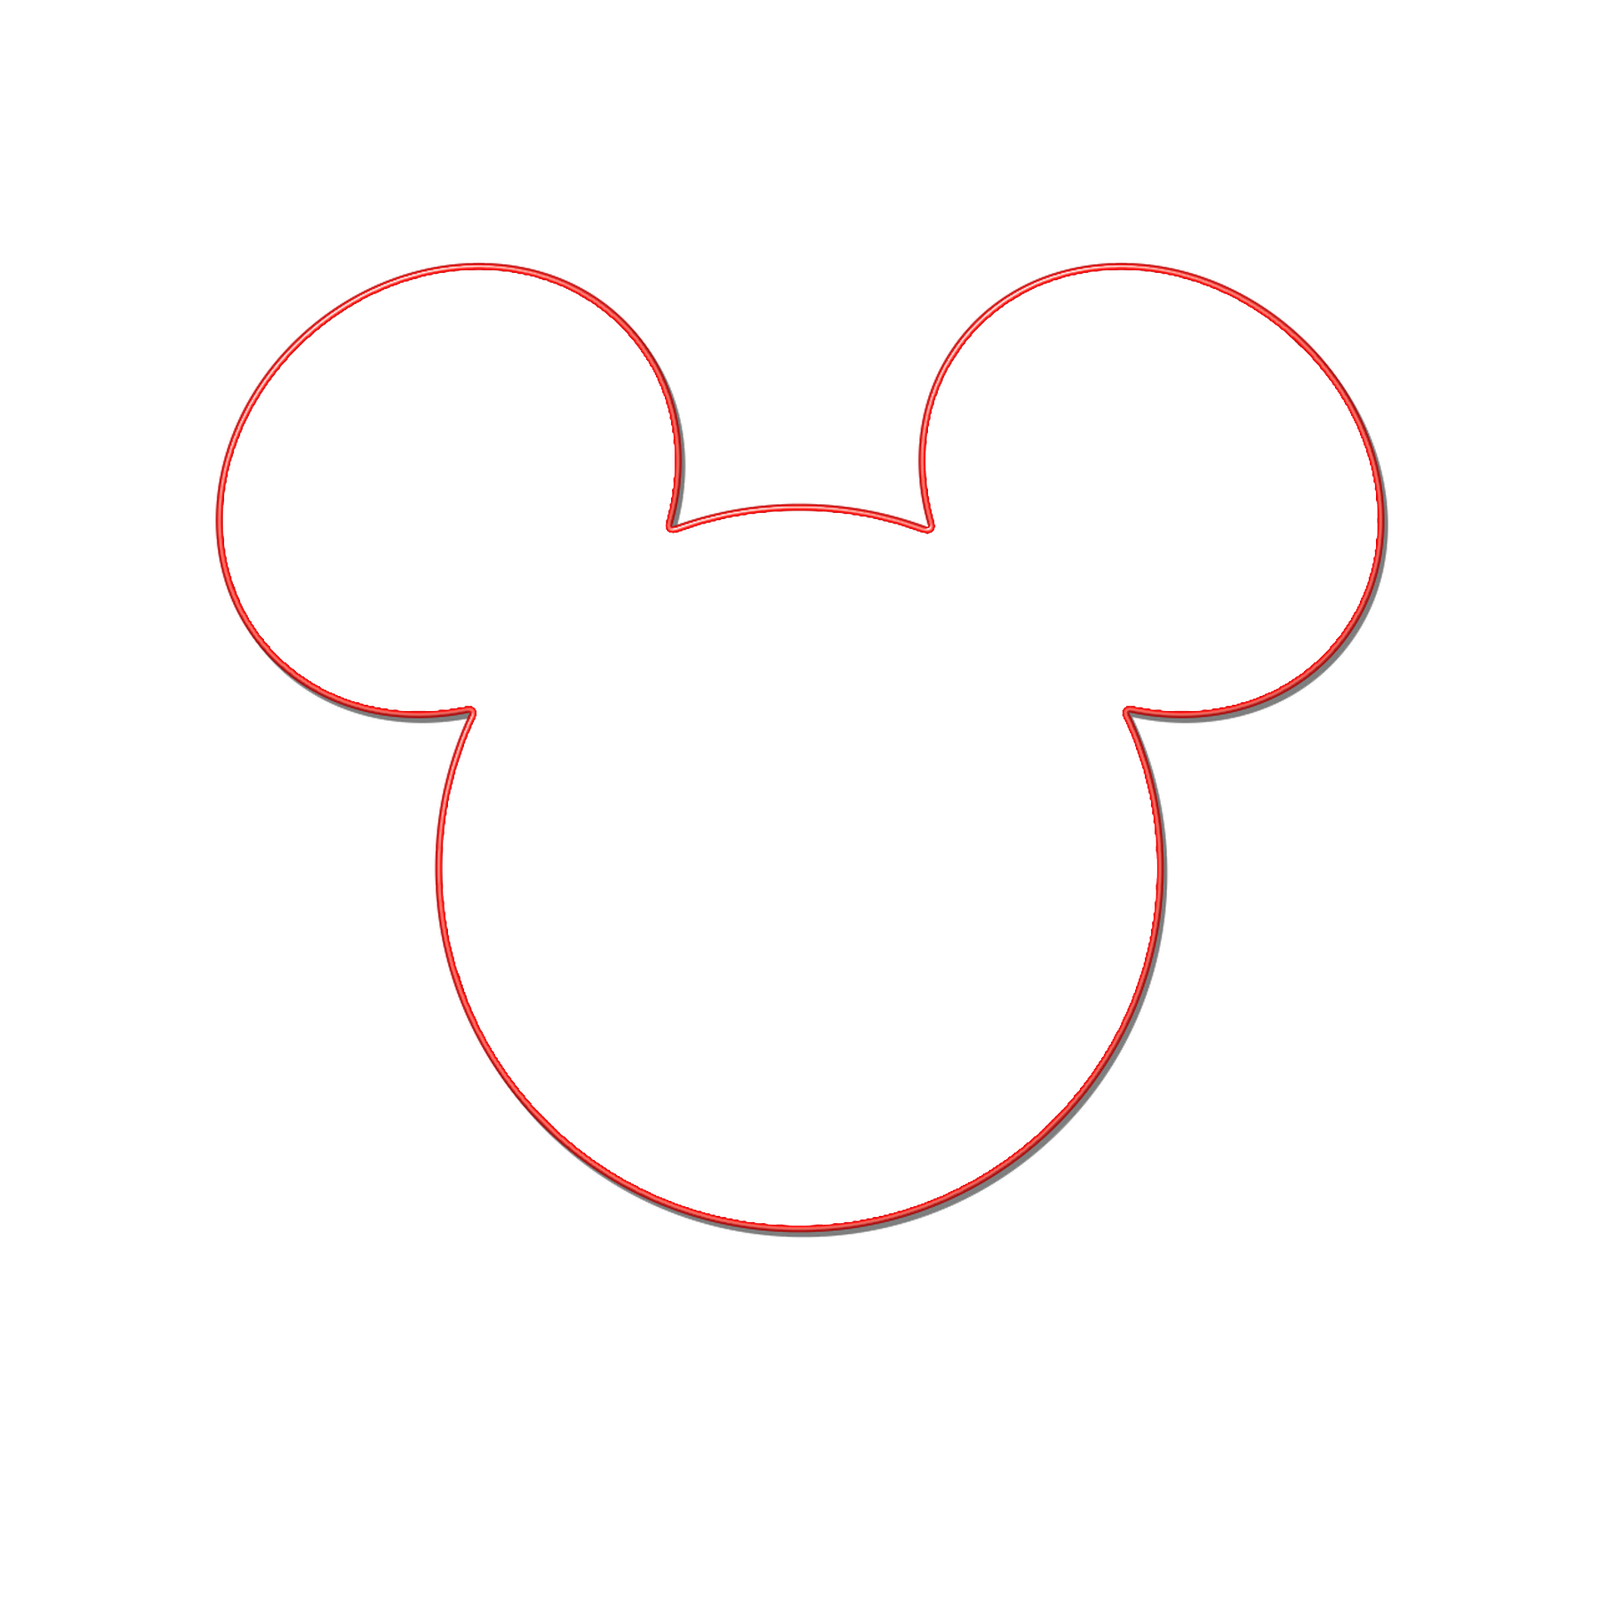  - Mickey Ears Clip Art